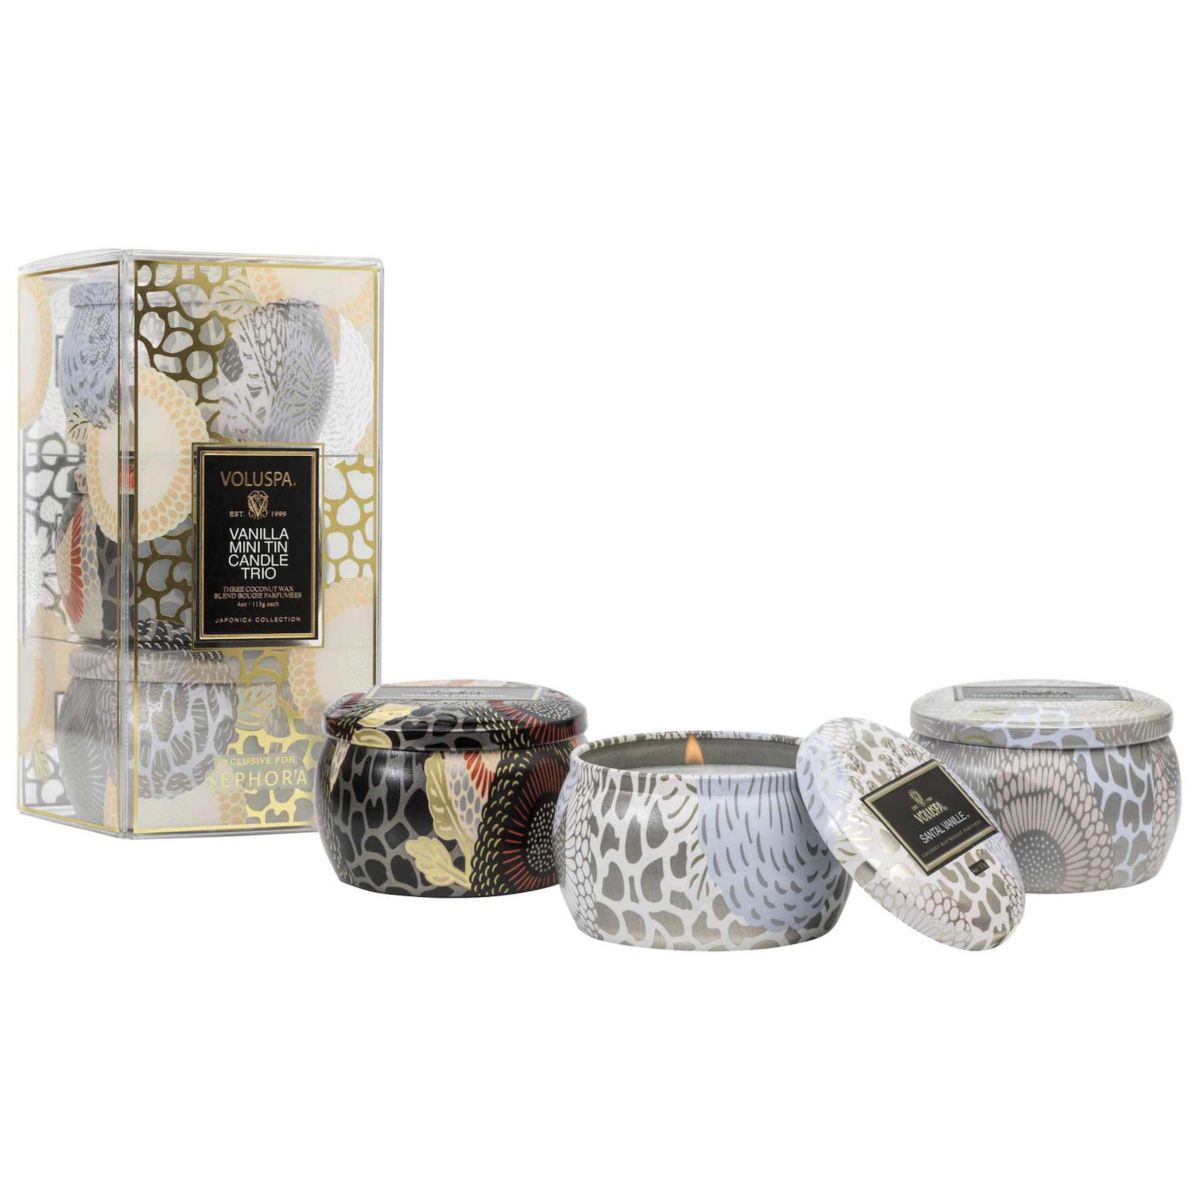 Voluspa Vanilla Mini Tin Candle Trio Gift Set VOLUSPA